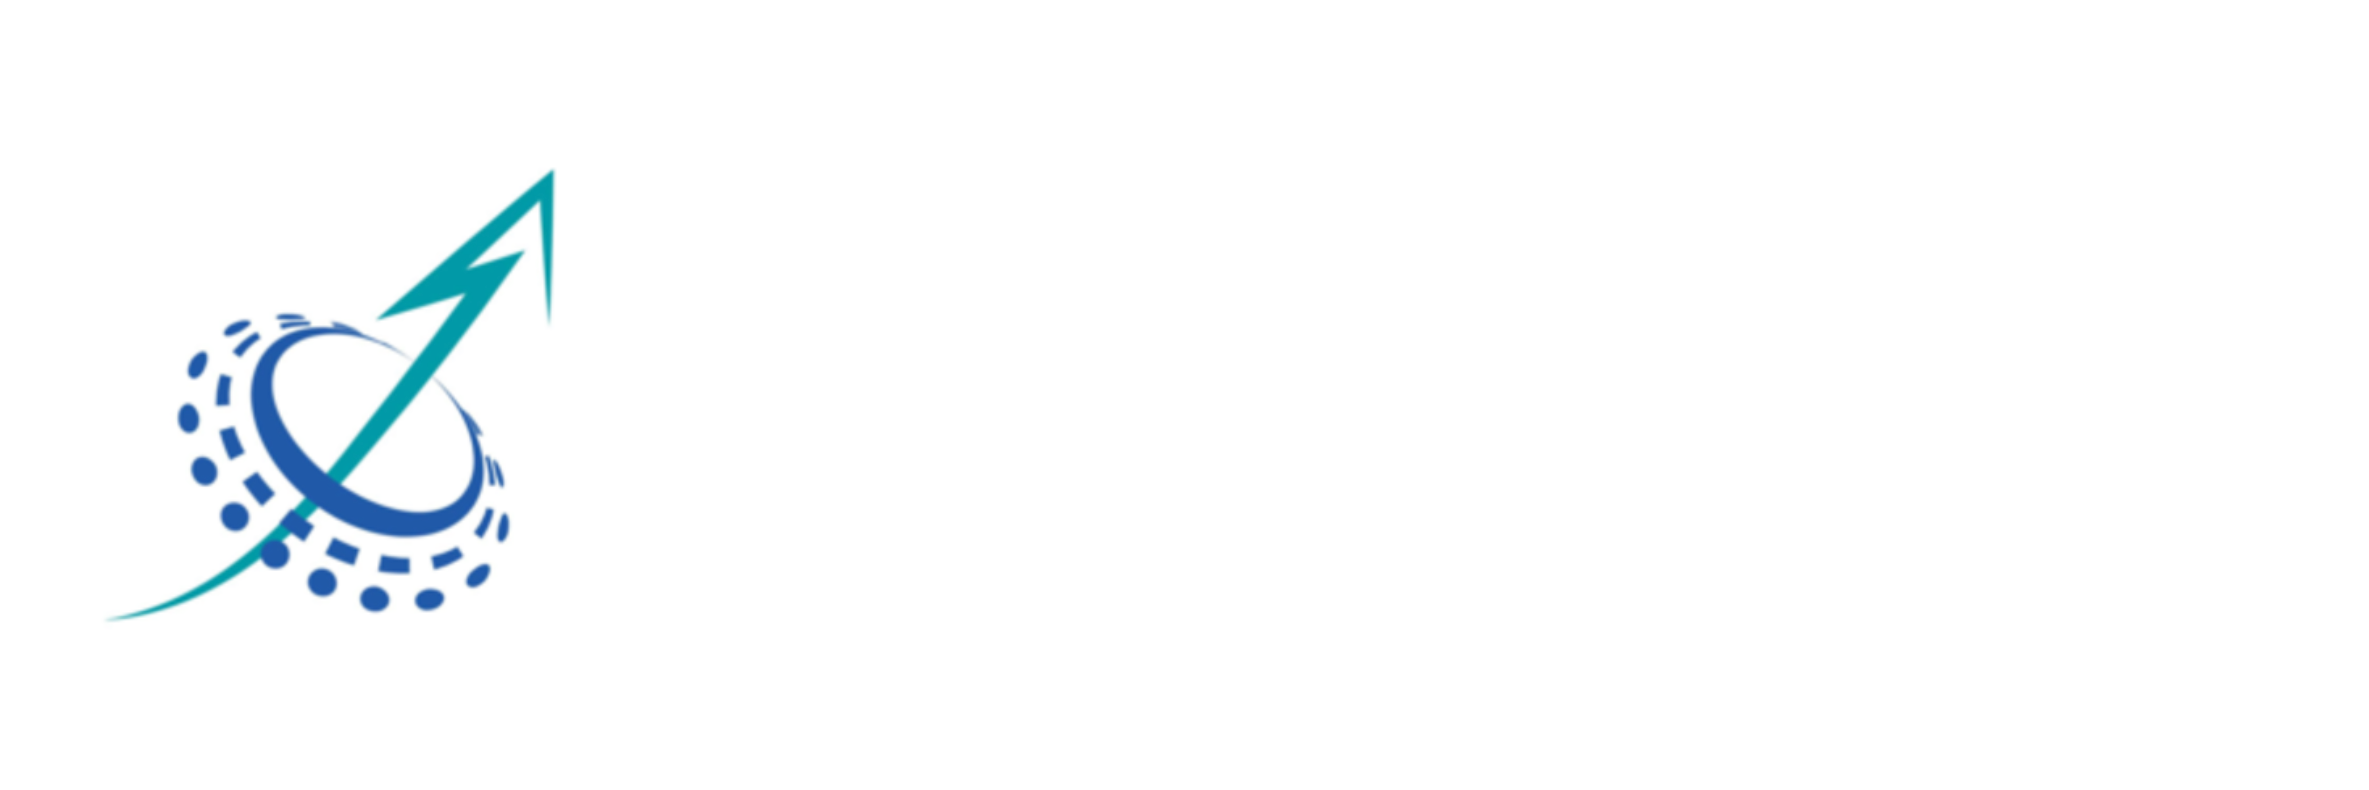 new-logo-kdvm2w